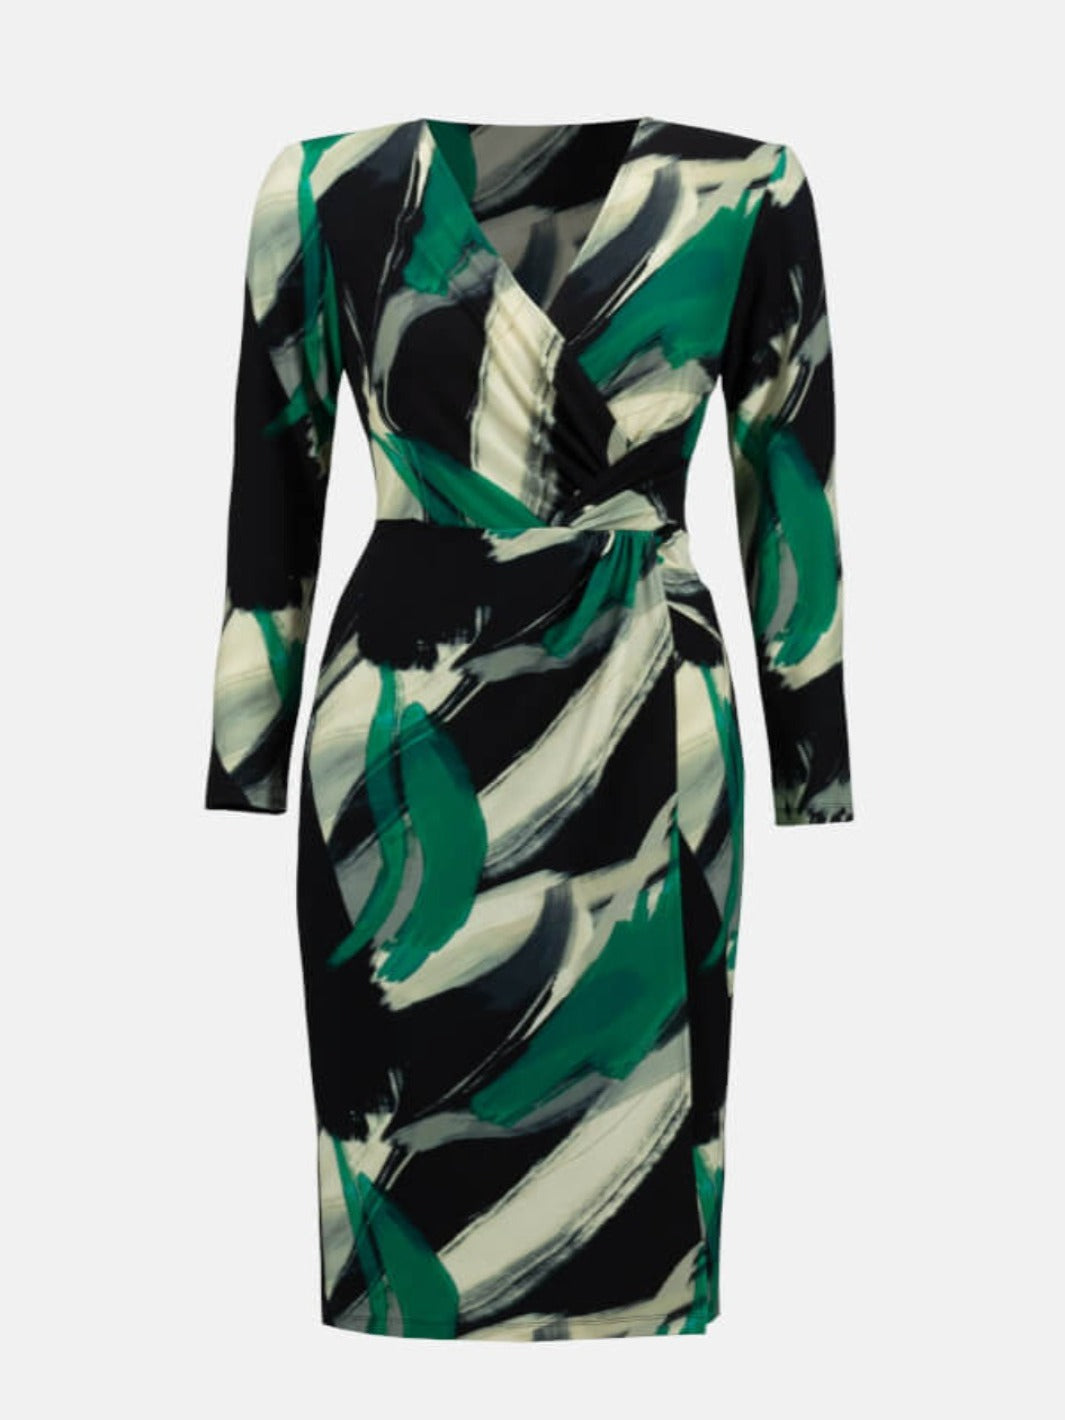 Joseph Ribkoff Abstract Print Dress In Black/Green 233127-Nicola Ross